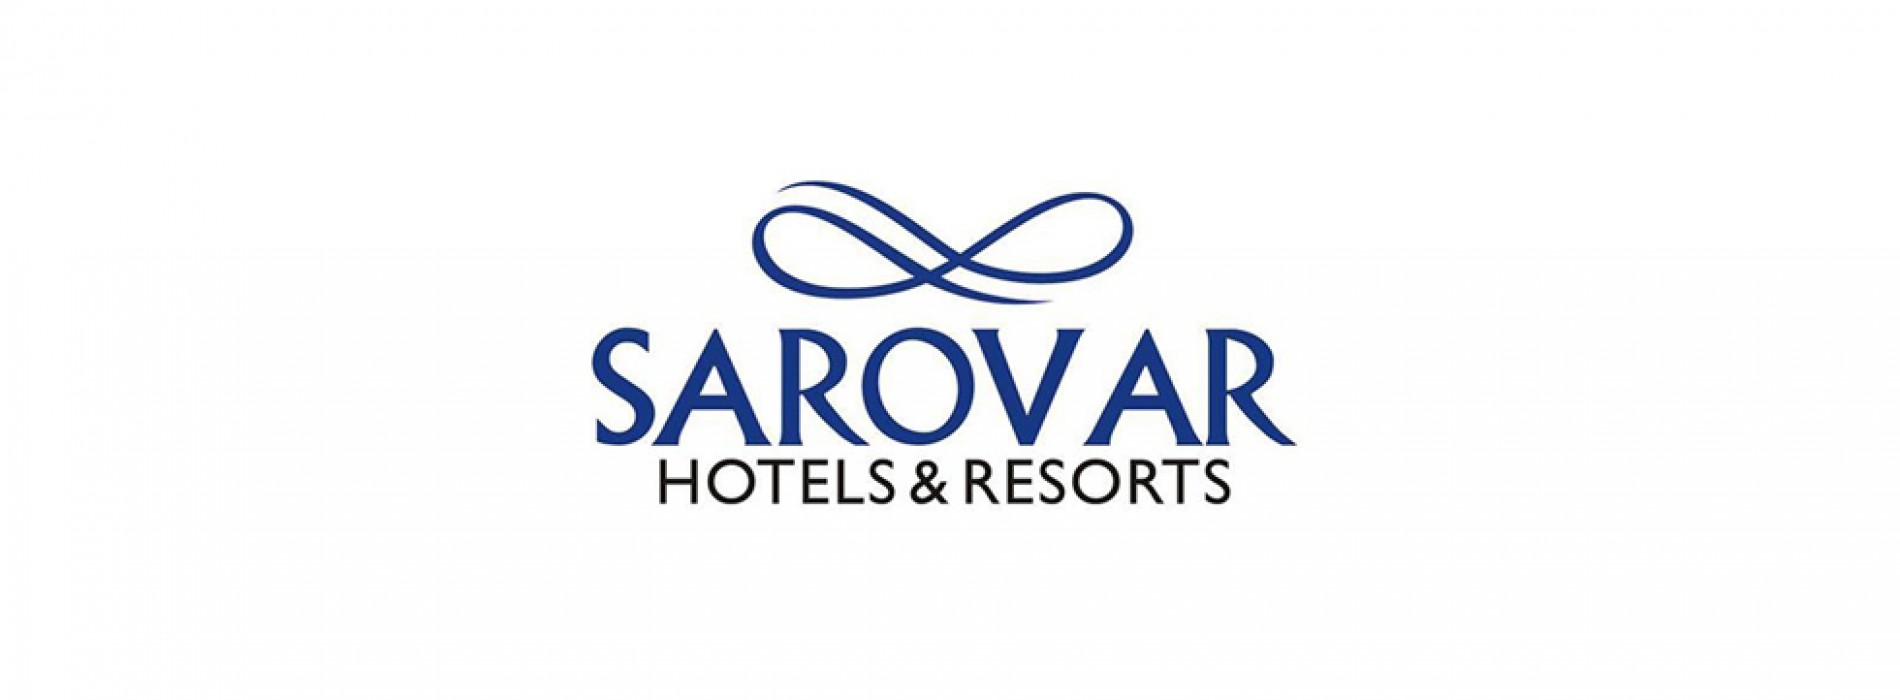 Sarovar Hotels & Resorts signs their second hotel in Dar-Es-Salaam, Tanzania